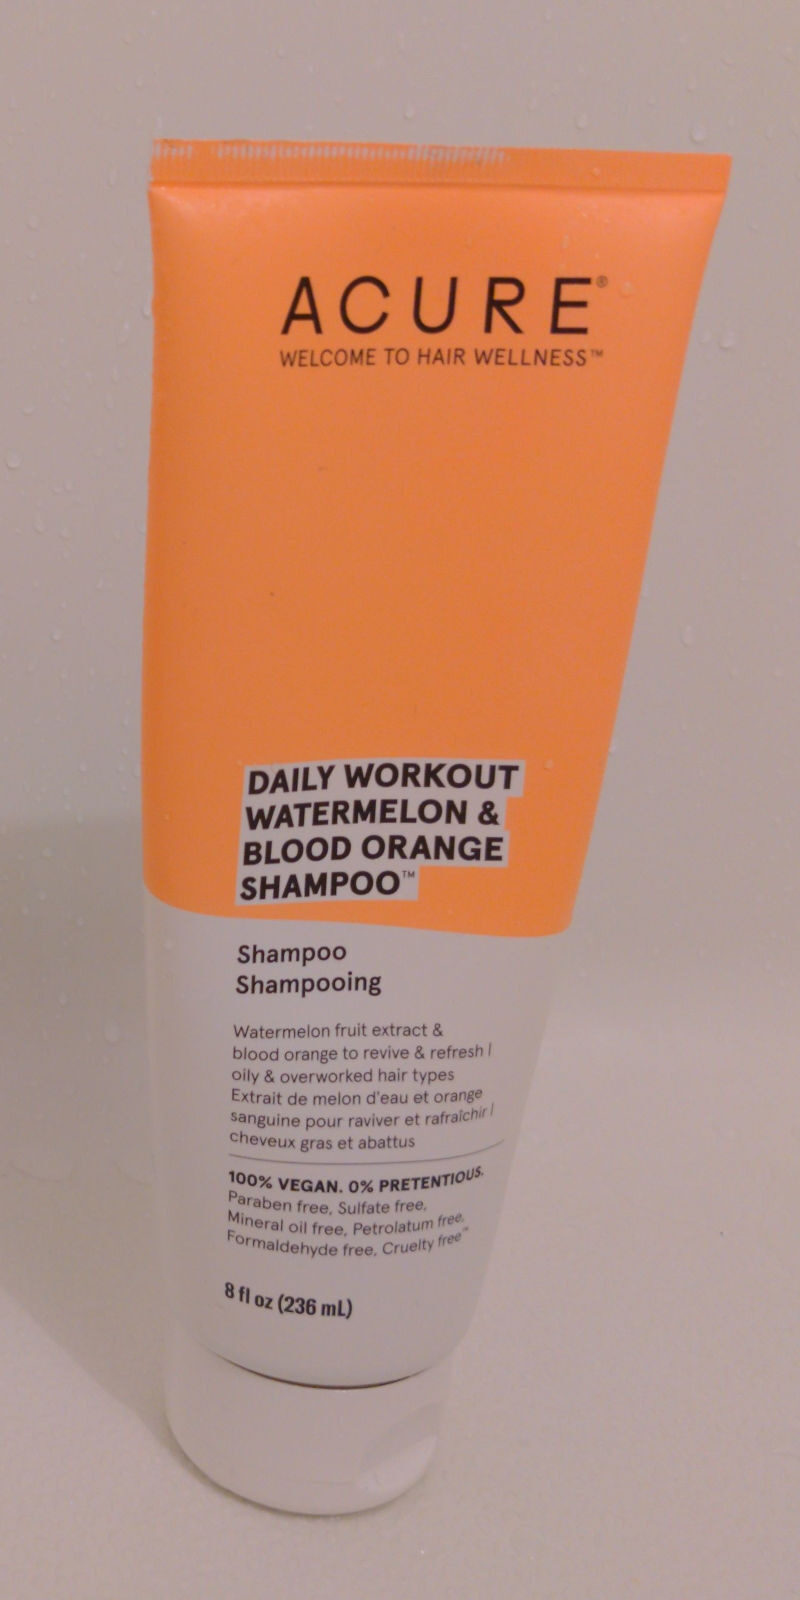 Daily Workout Watermelon & Blood Orange Shampoo - Product - en